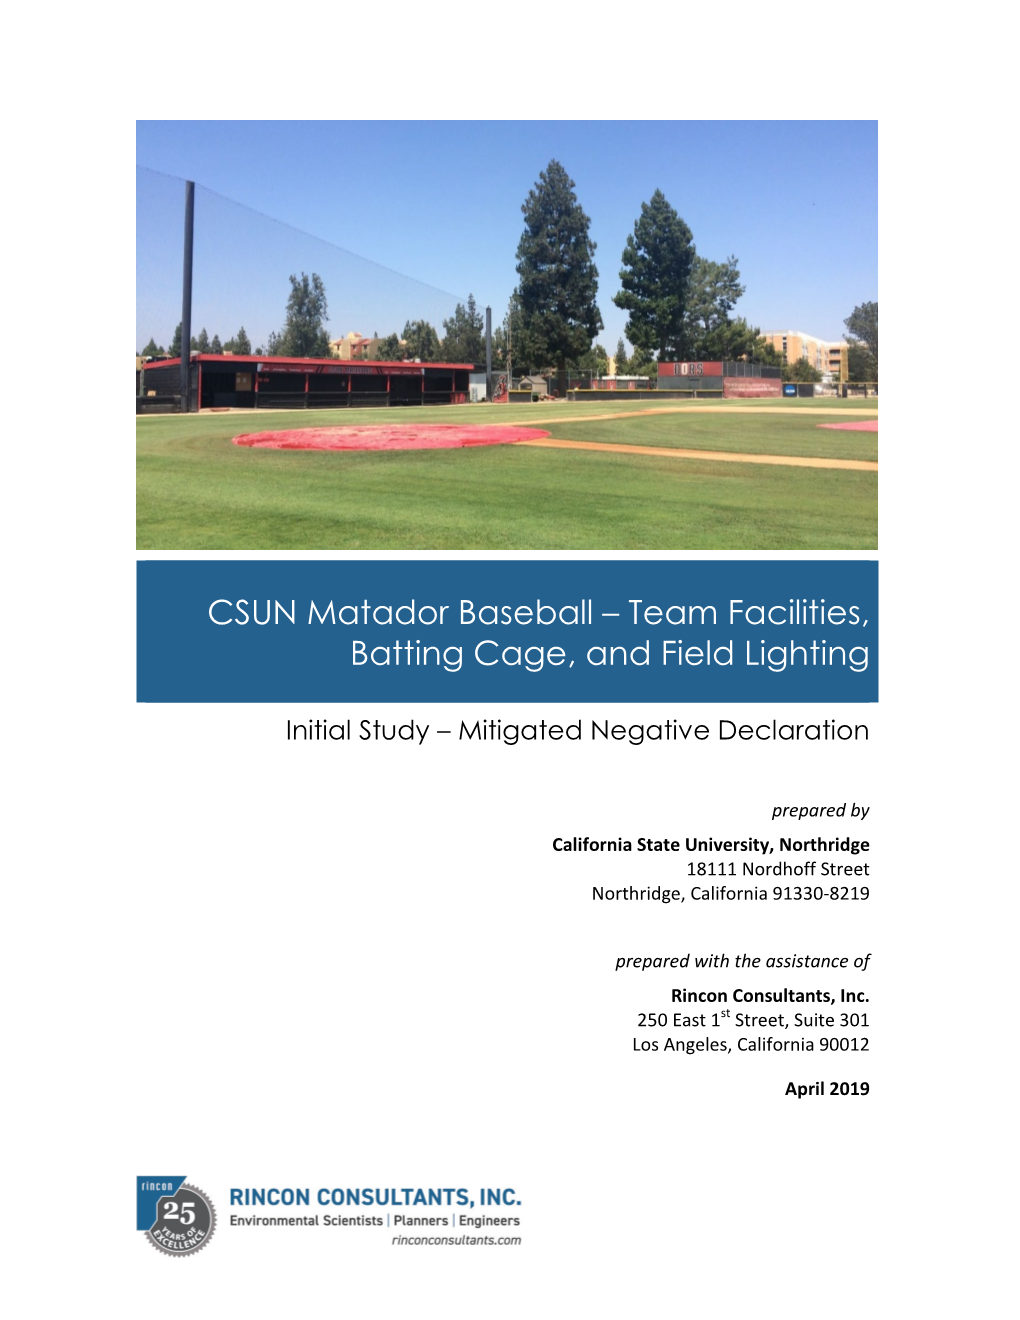 CSUN Matador Baseball – Team Facilities, Batting Cage, and Field Lighting